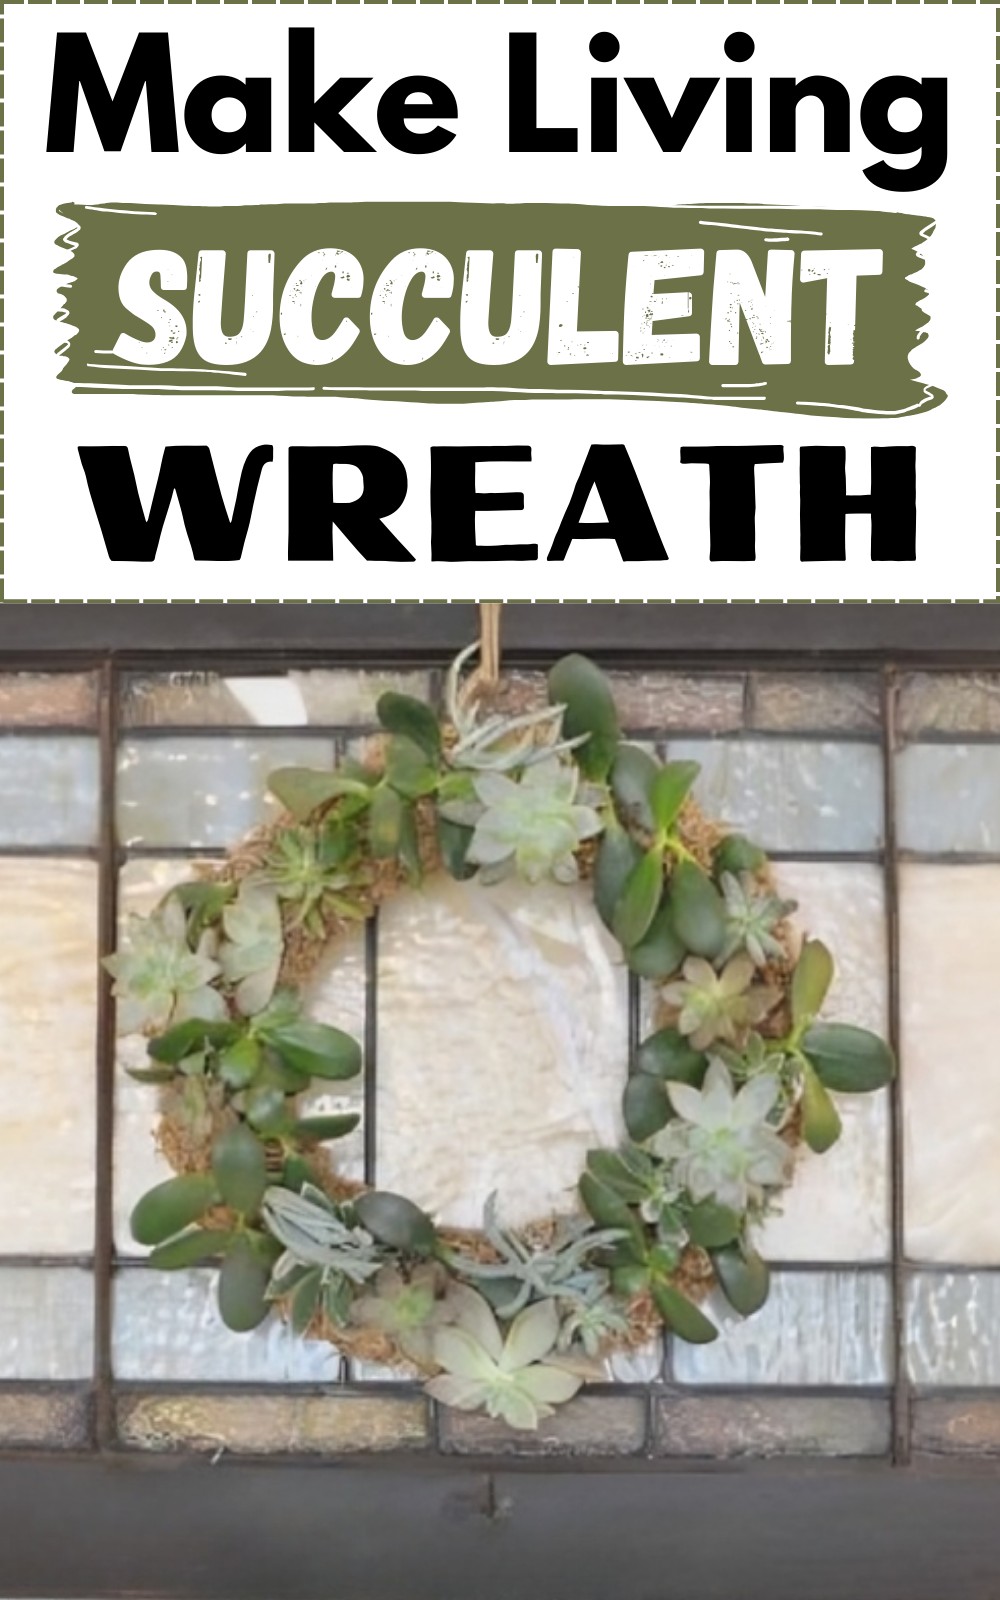 Make Living Succulent Wreath